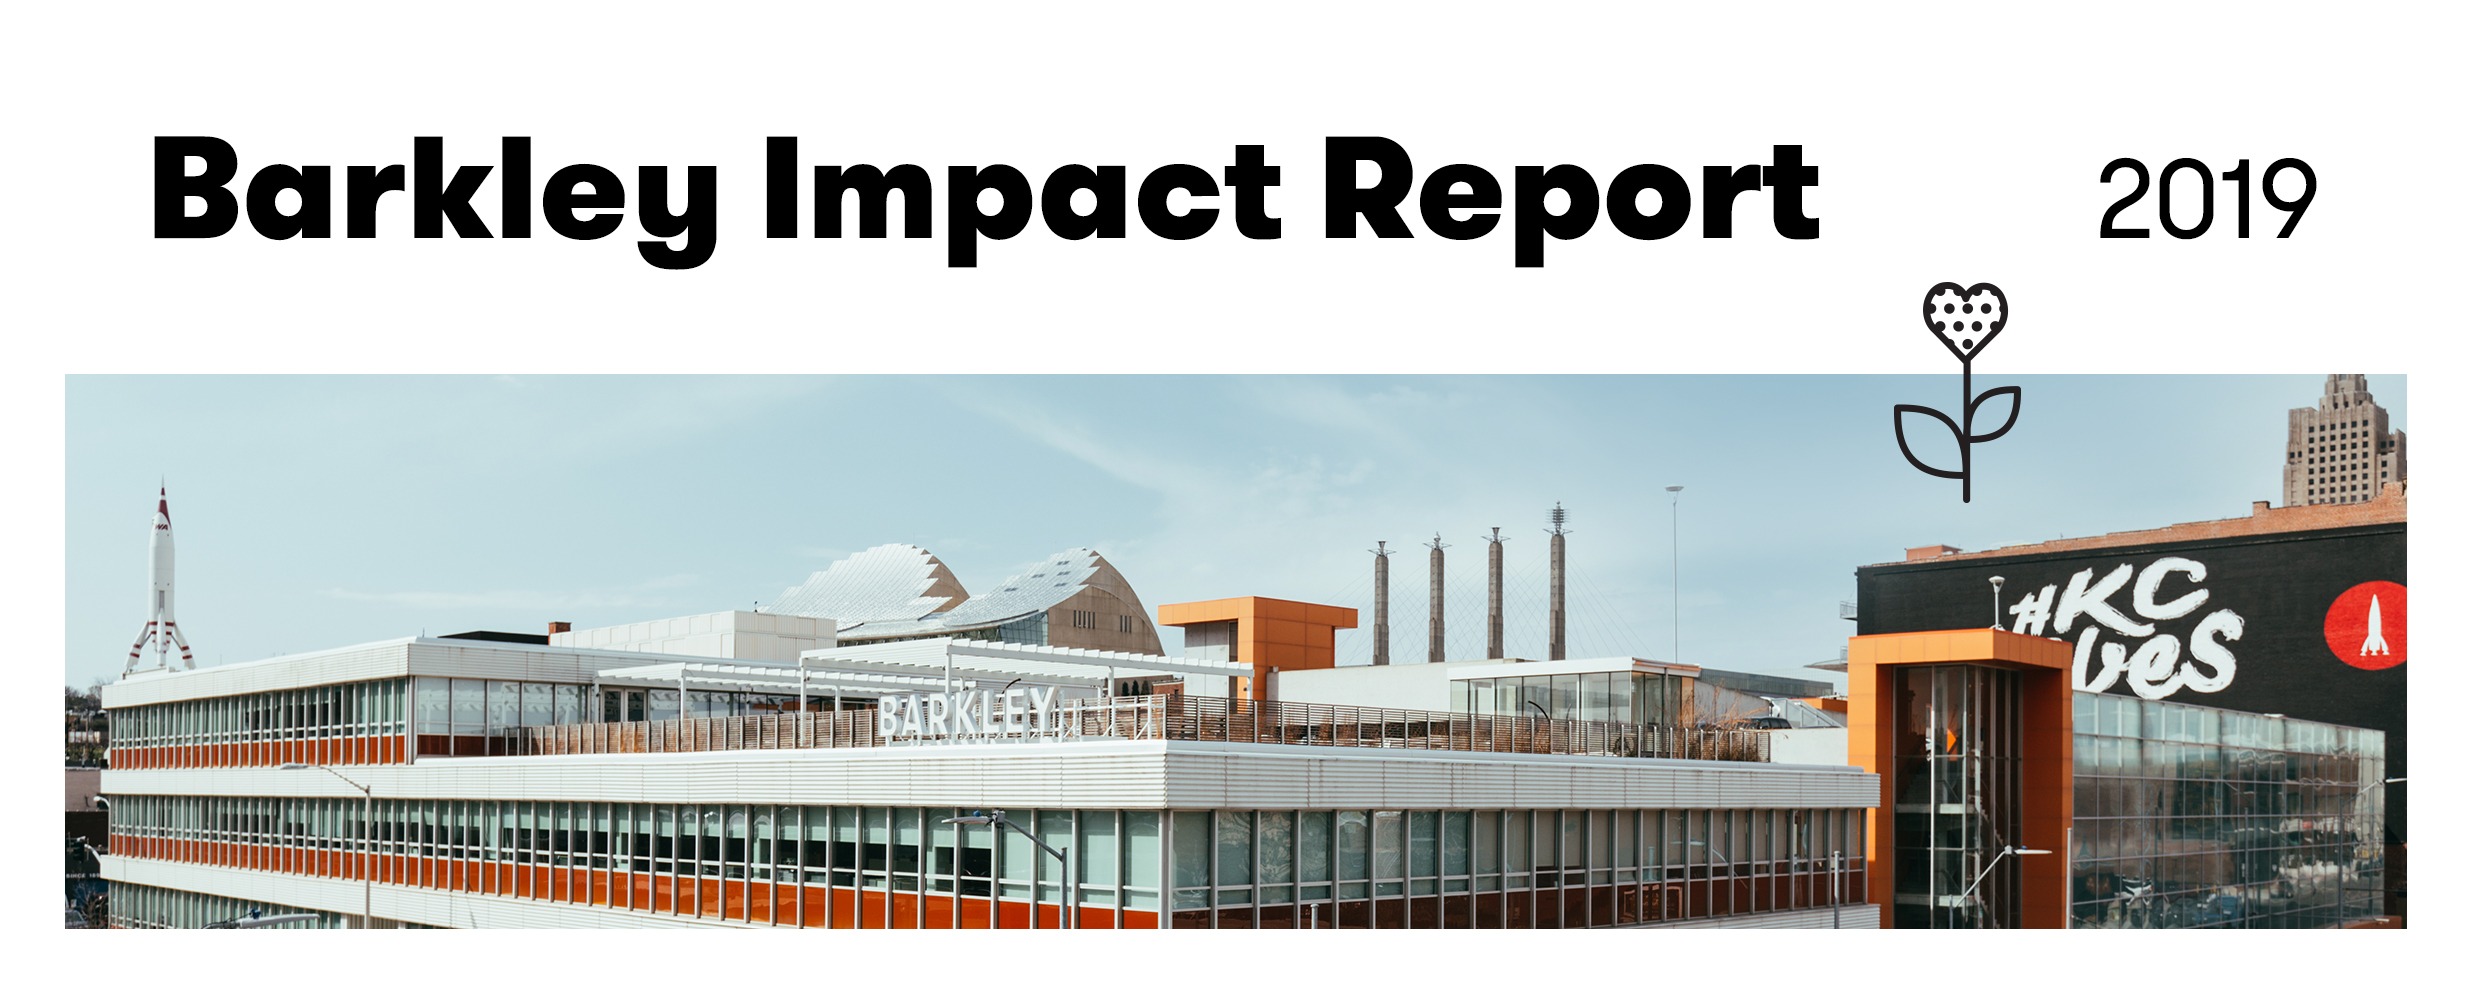 2019 Barkley Impact Report cover 2470x990 - Wide